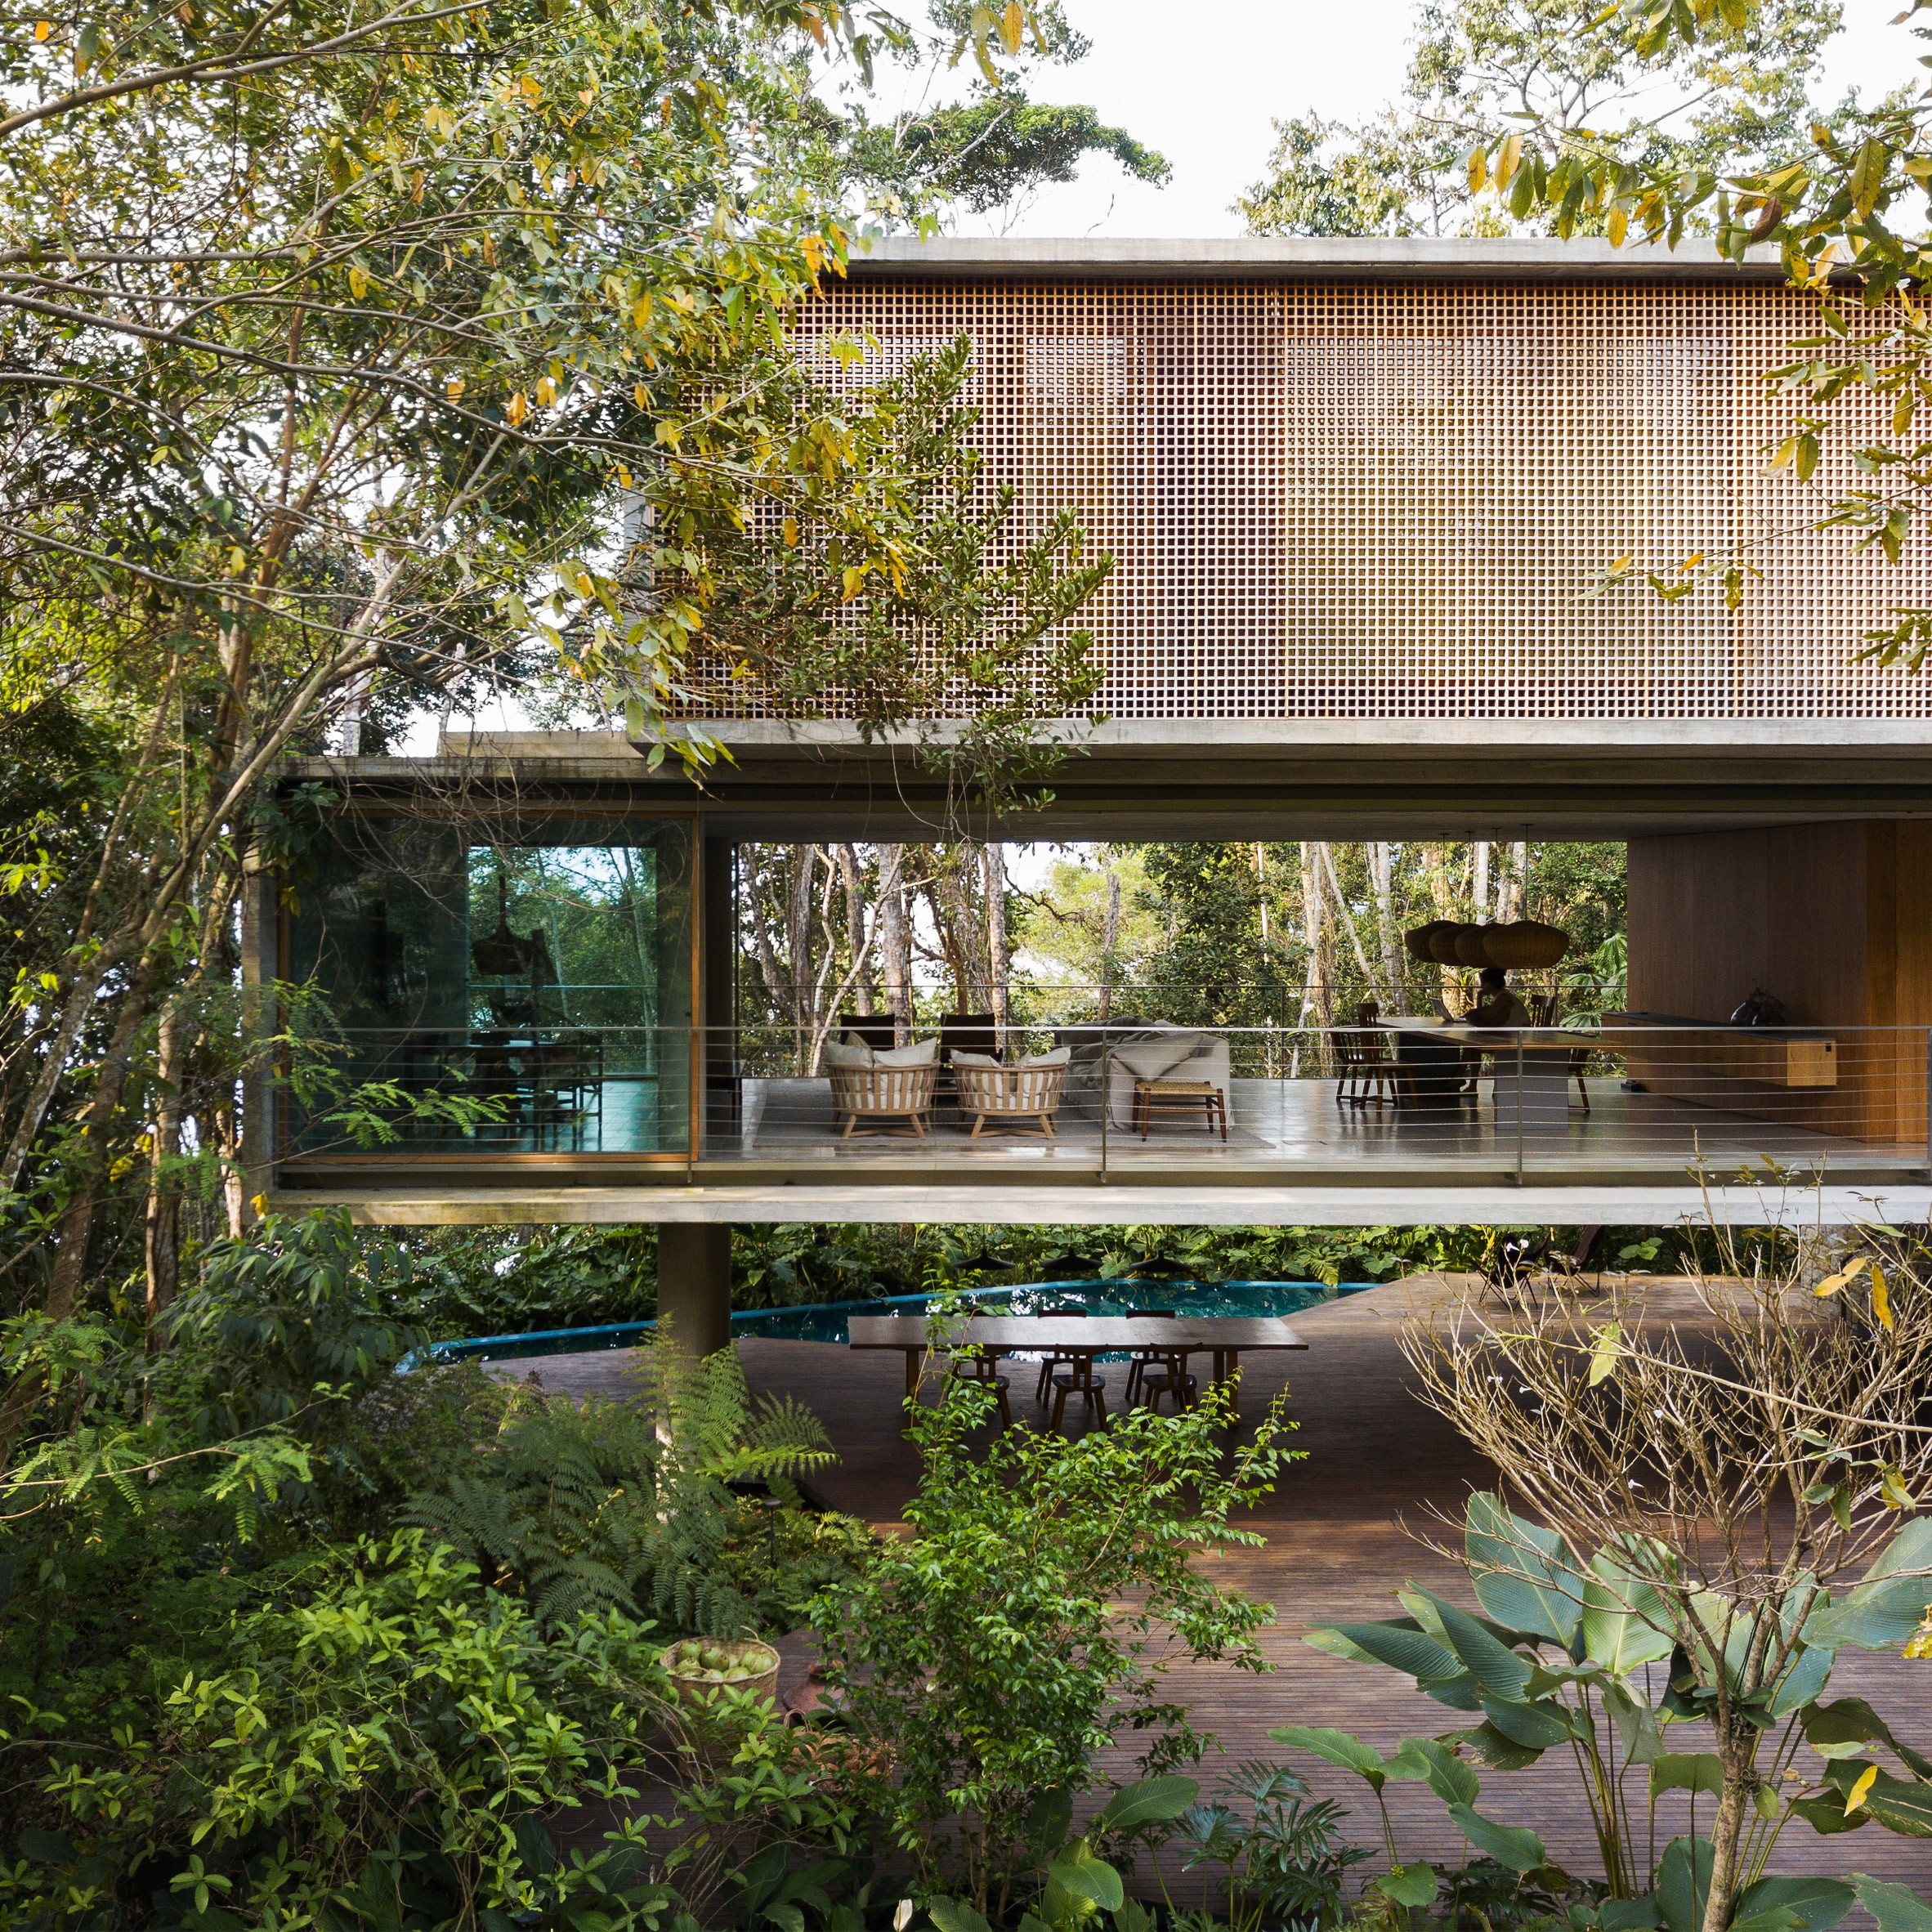 Studio MK27 raises house on concrete pilotis in the Brazilian rainforest picture